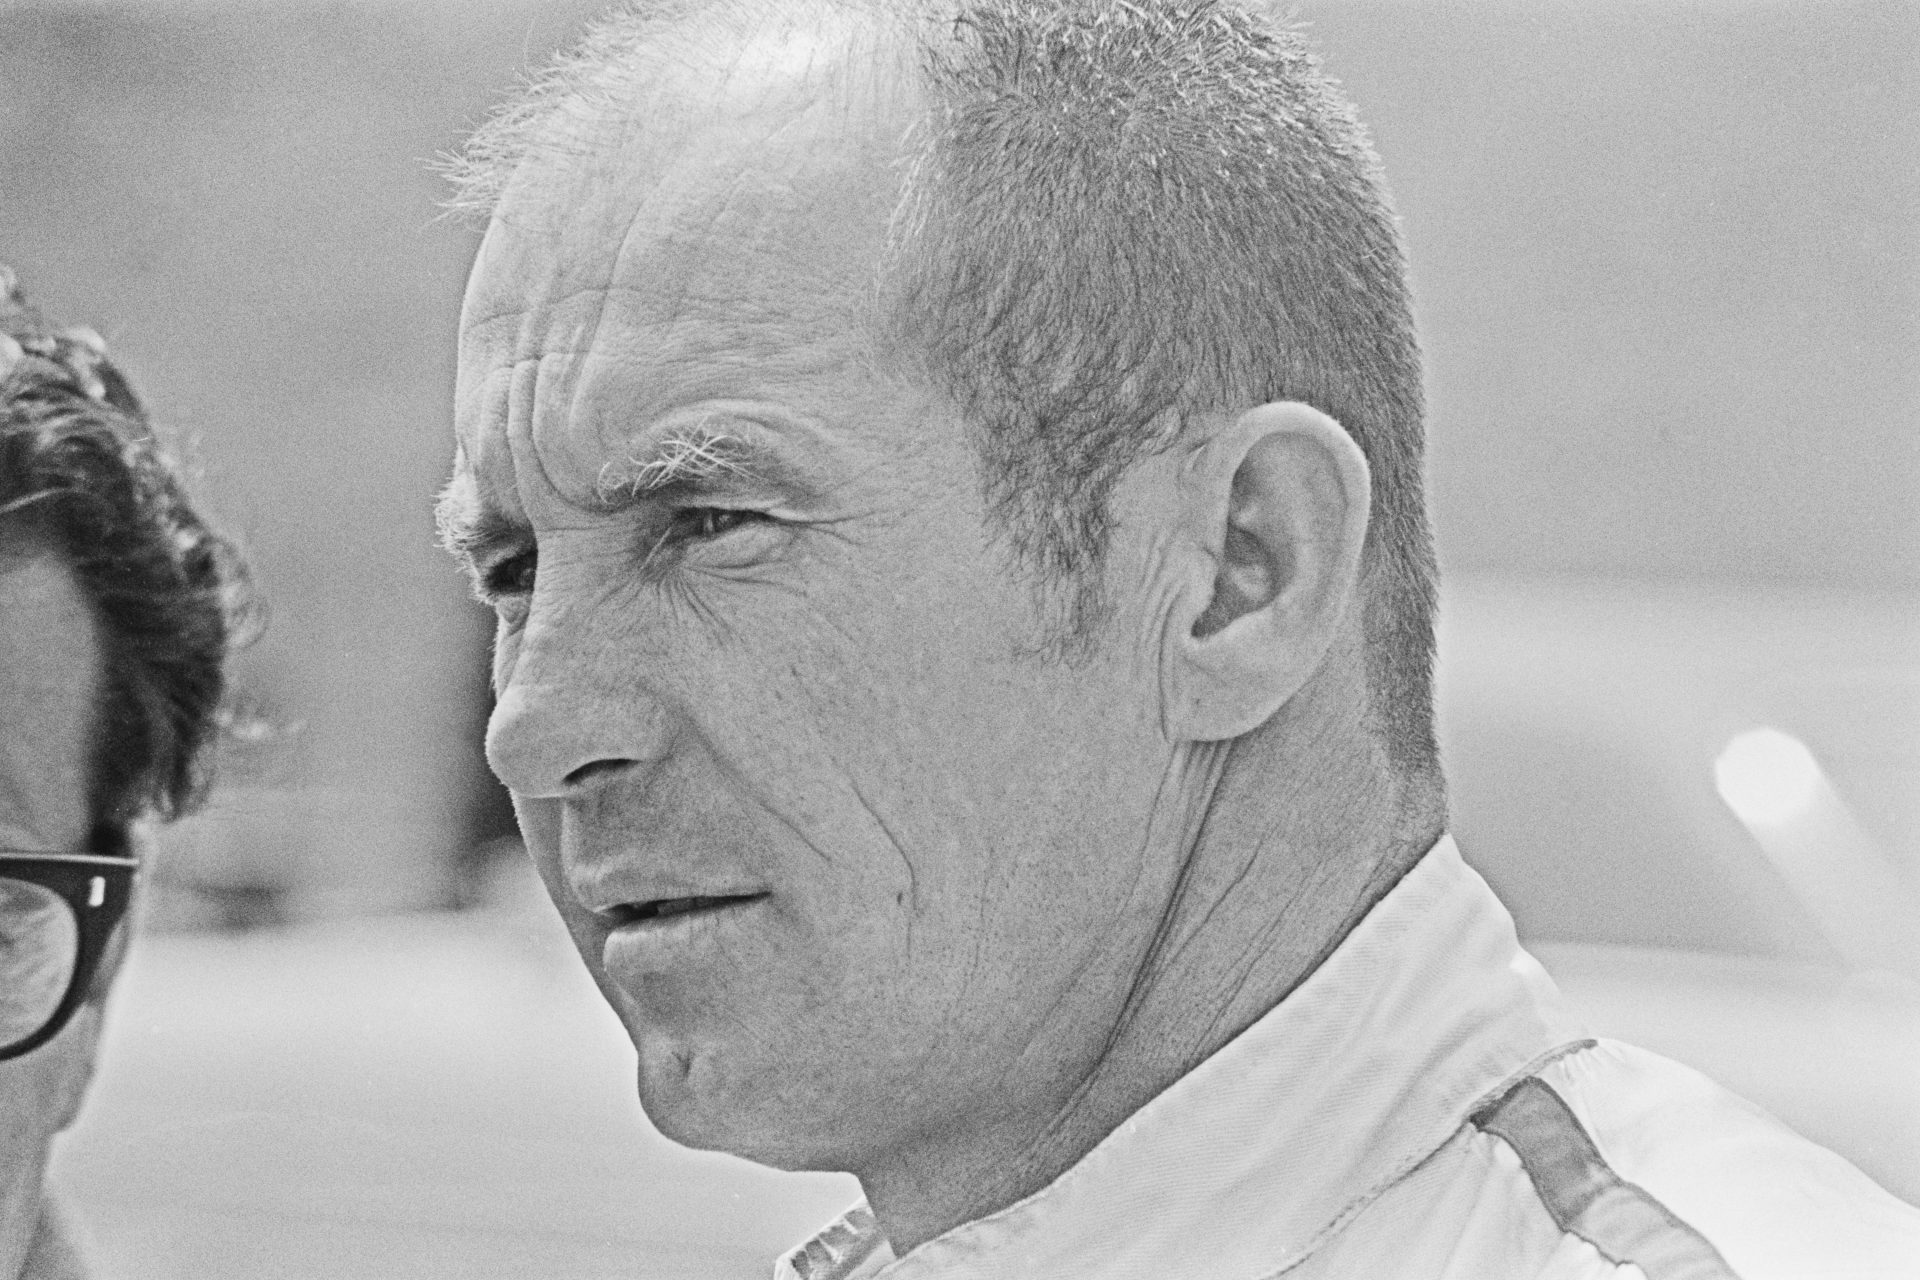 American racing legend Parnelli Jones passes away aged 90